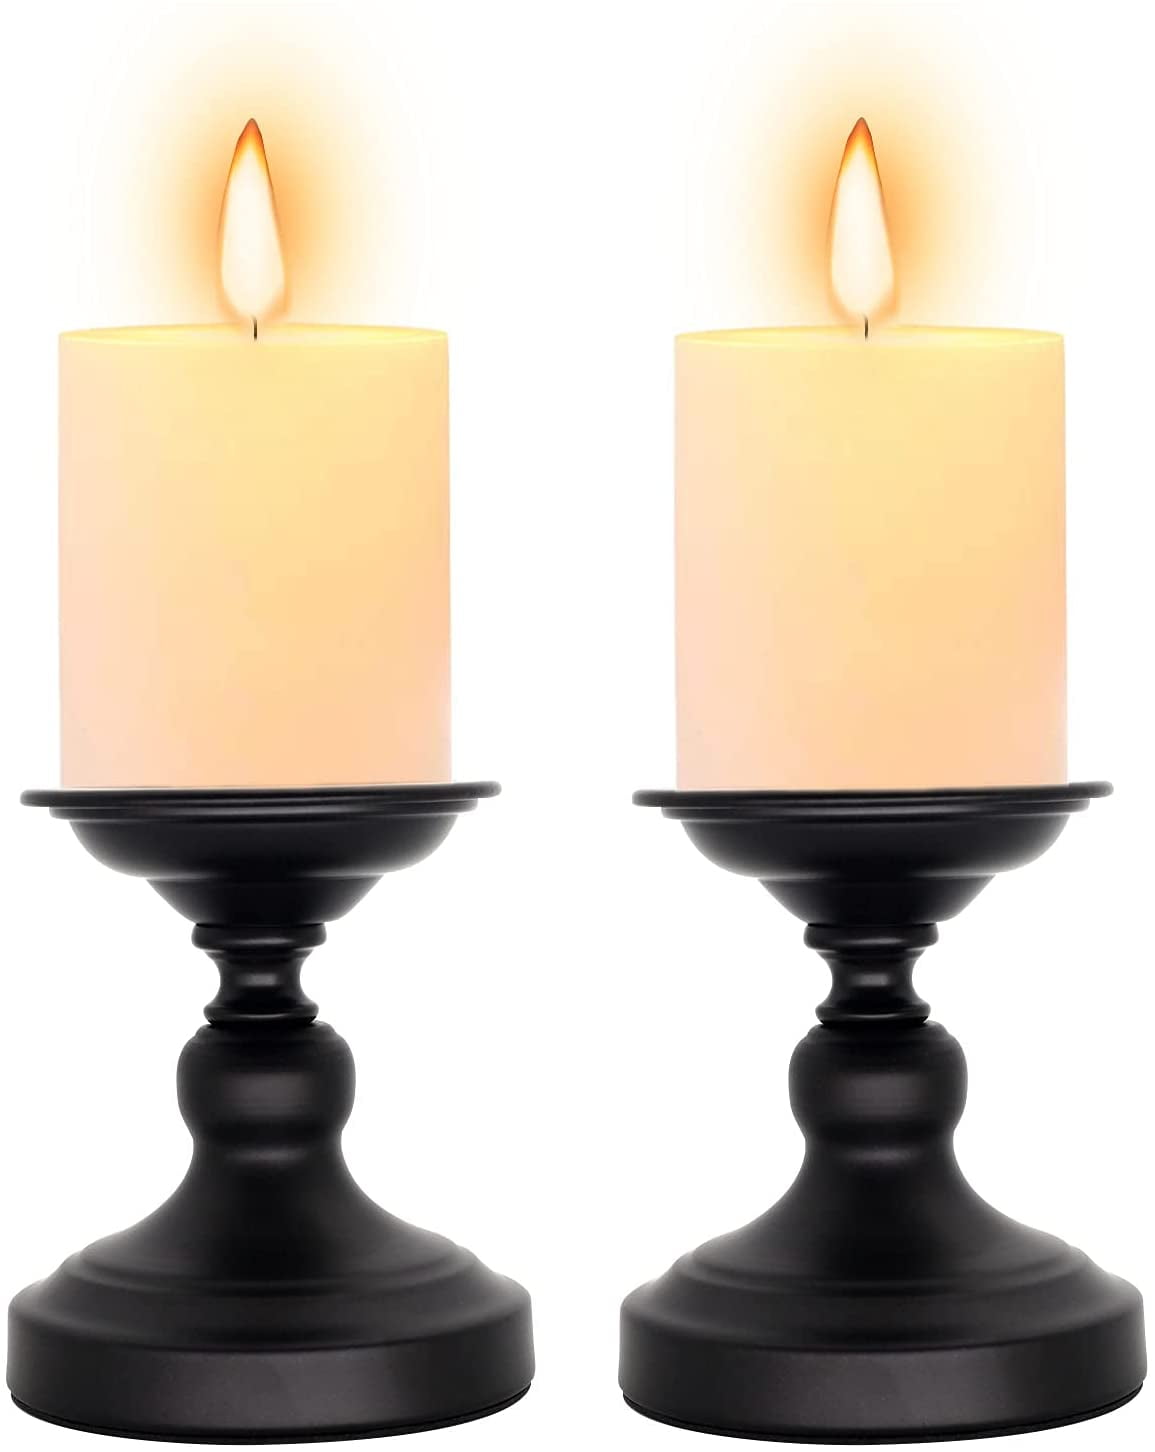 Black Metal Pillar Candle Holders Set of 2 Decorative Candlestick Candle Holders Stand Decorations Home Décor Gifts for Bedroom Livingroom Wedding 